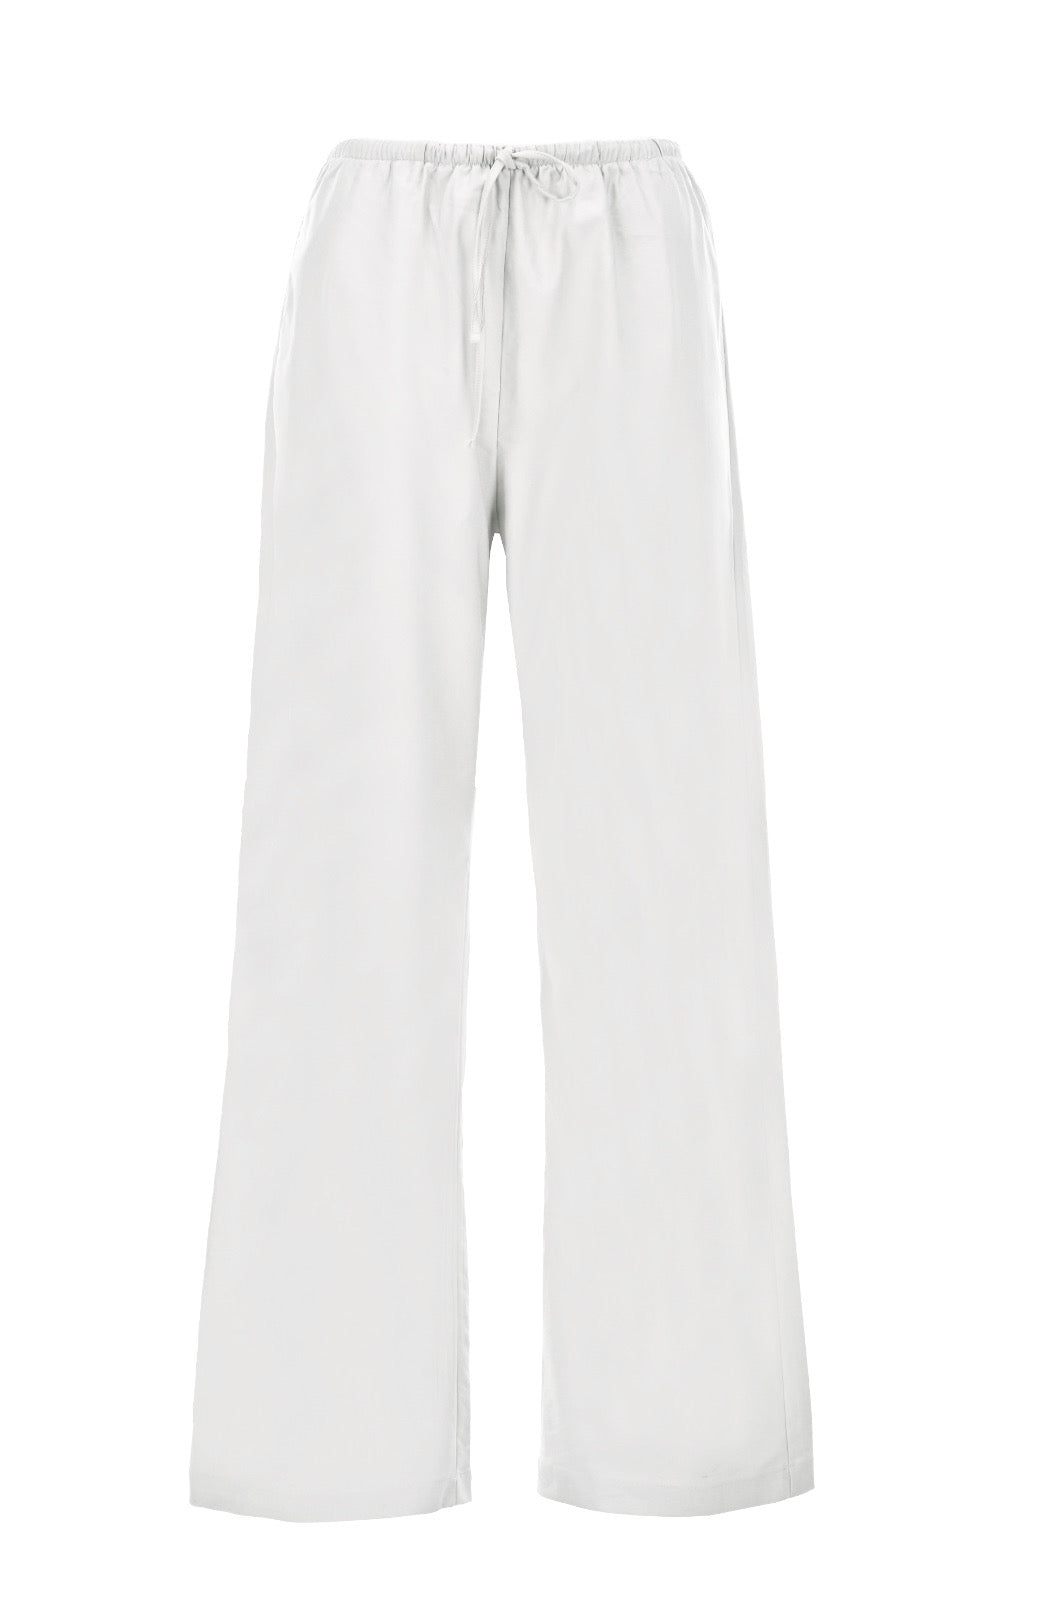 Deutzia Simple Pant Kırık Beyaz